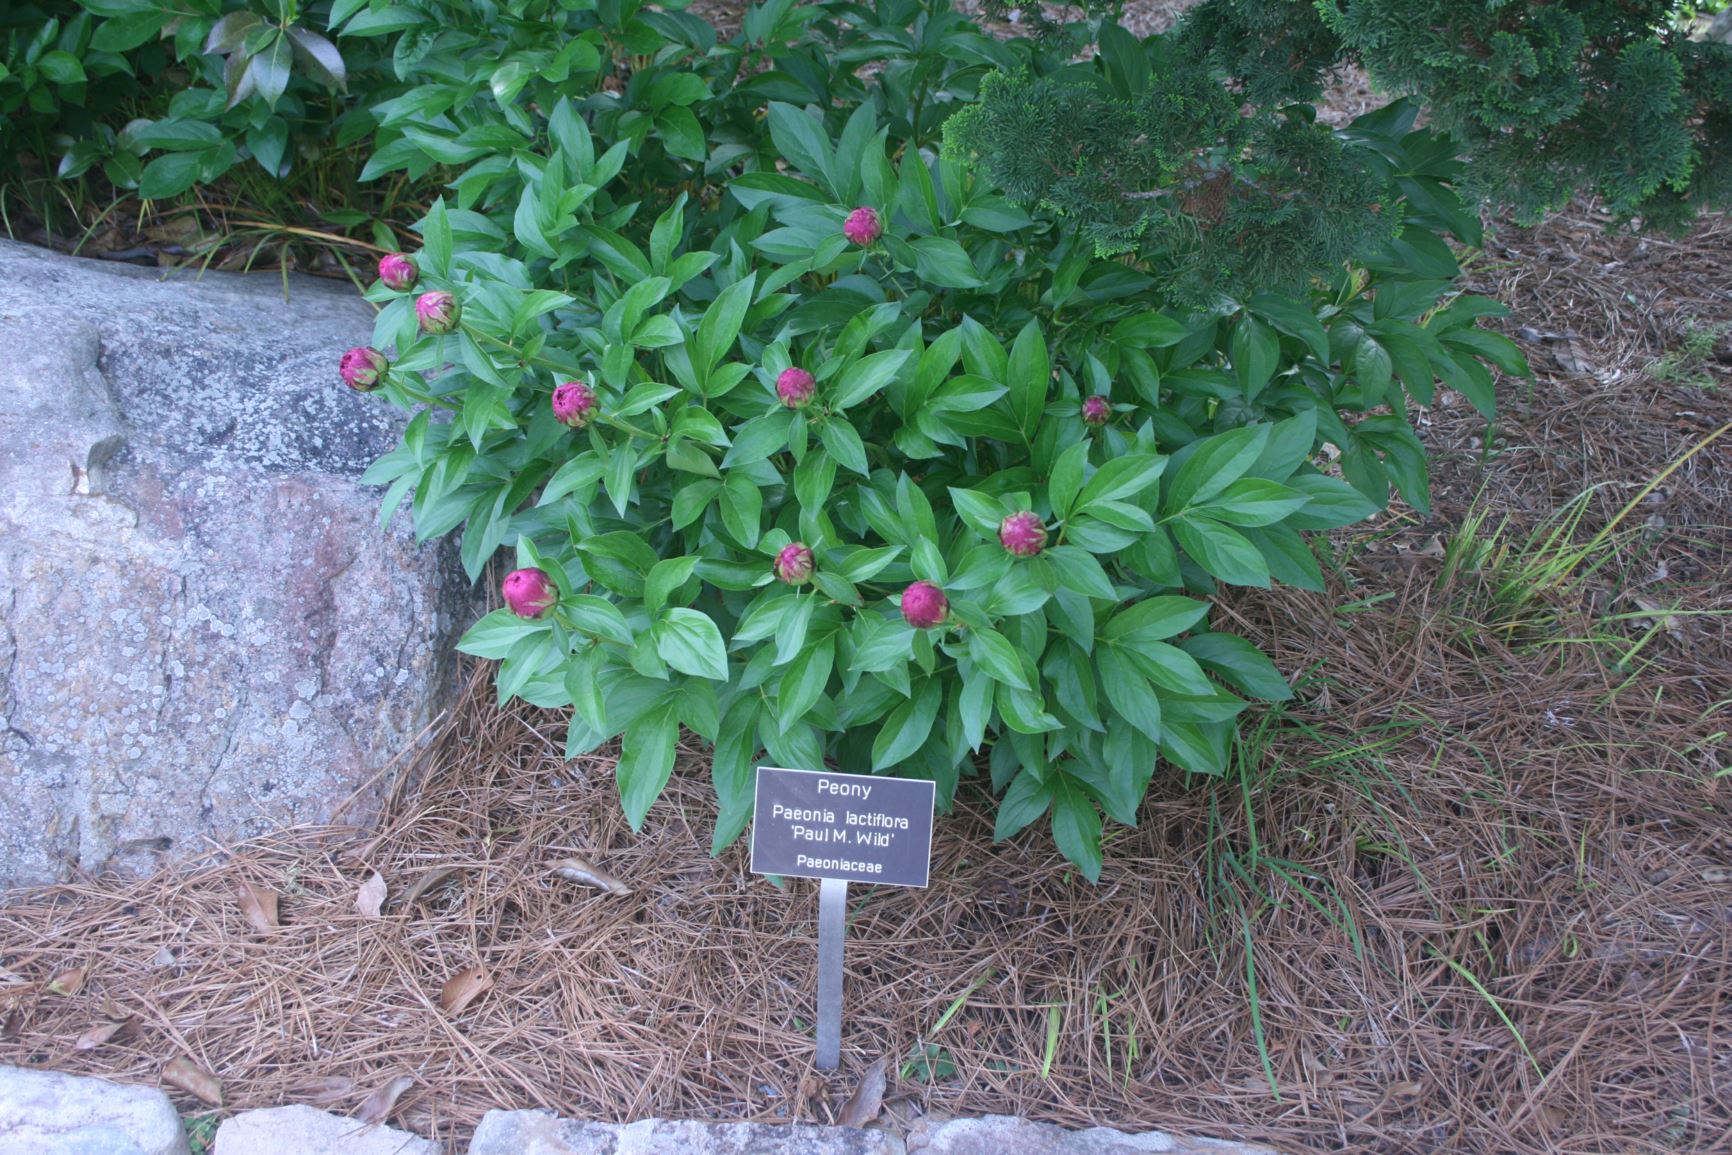 Paeonia lactiflora 'Paul M. Wild' - herbaceous peony